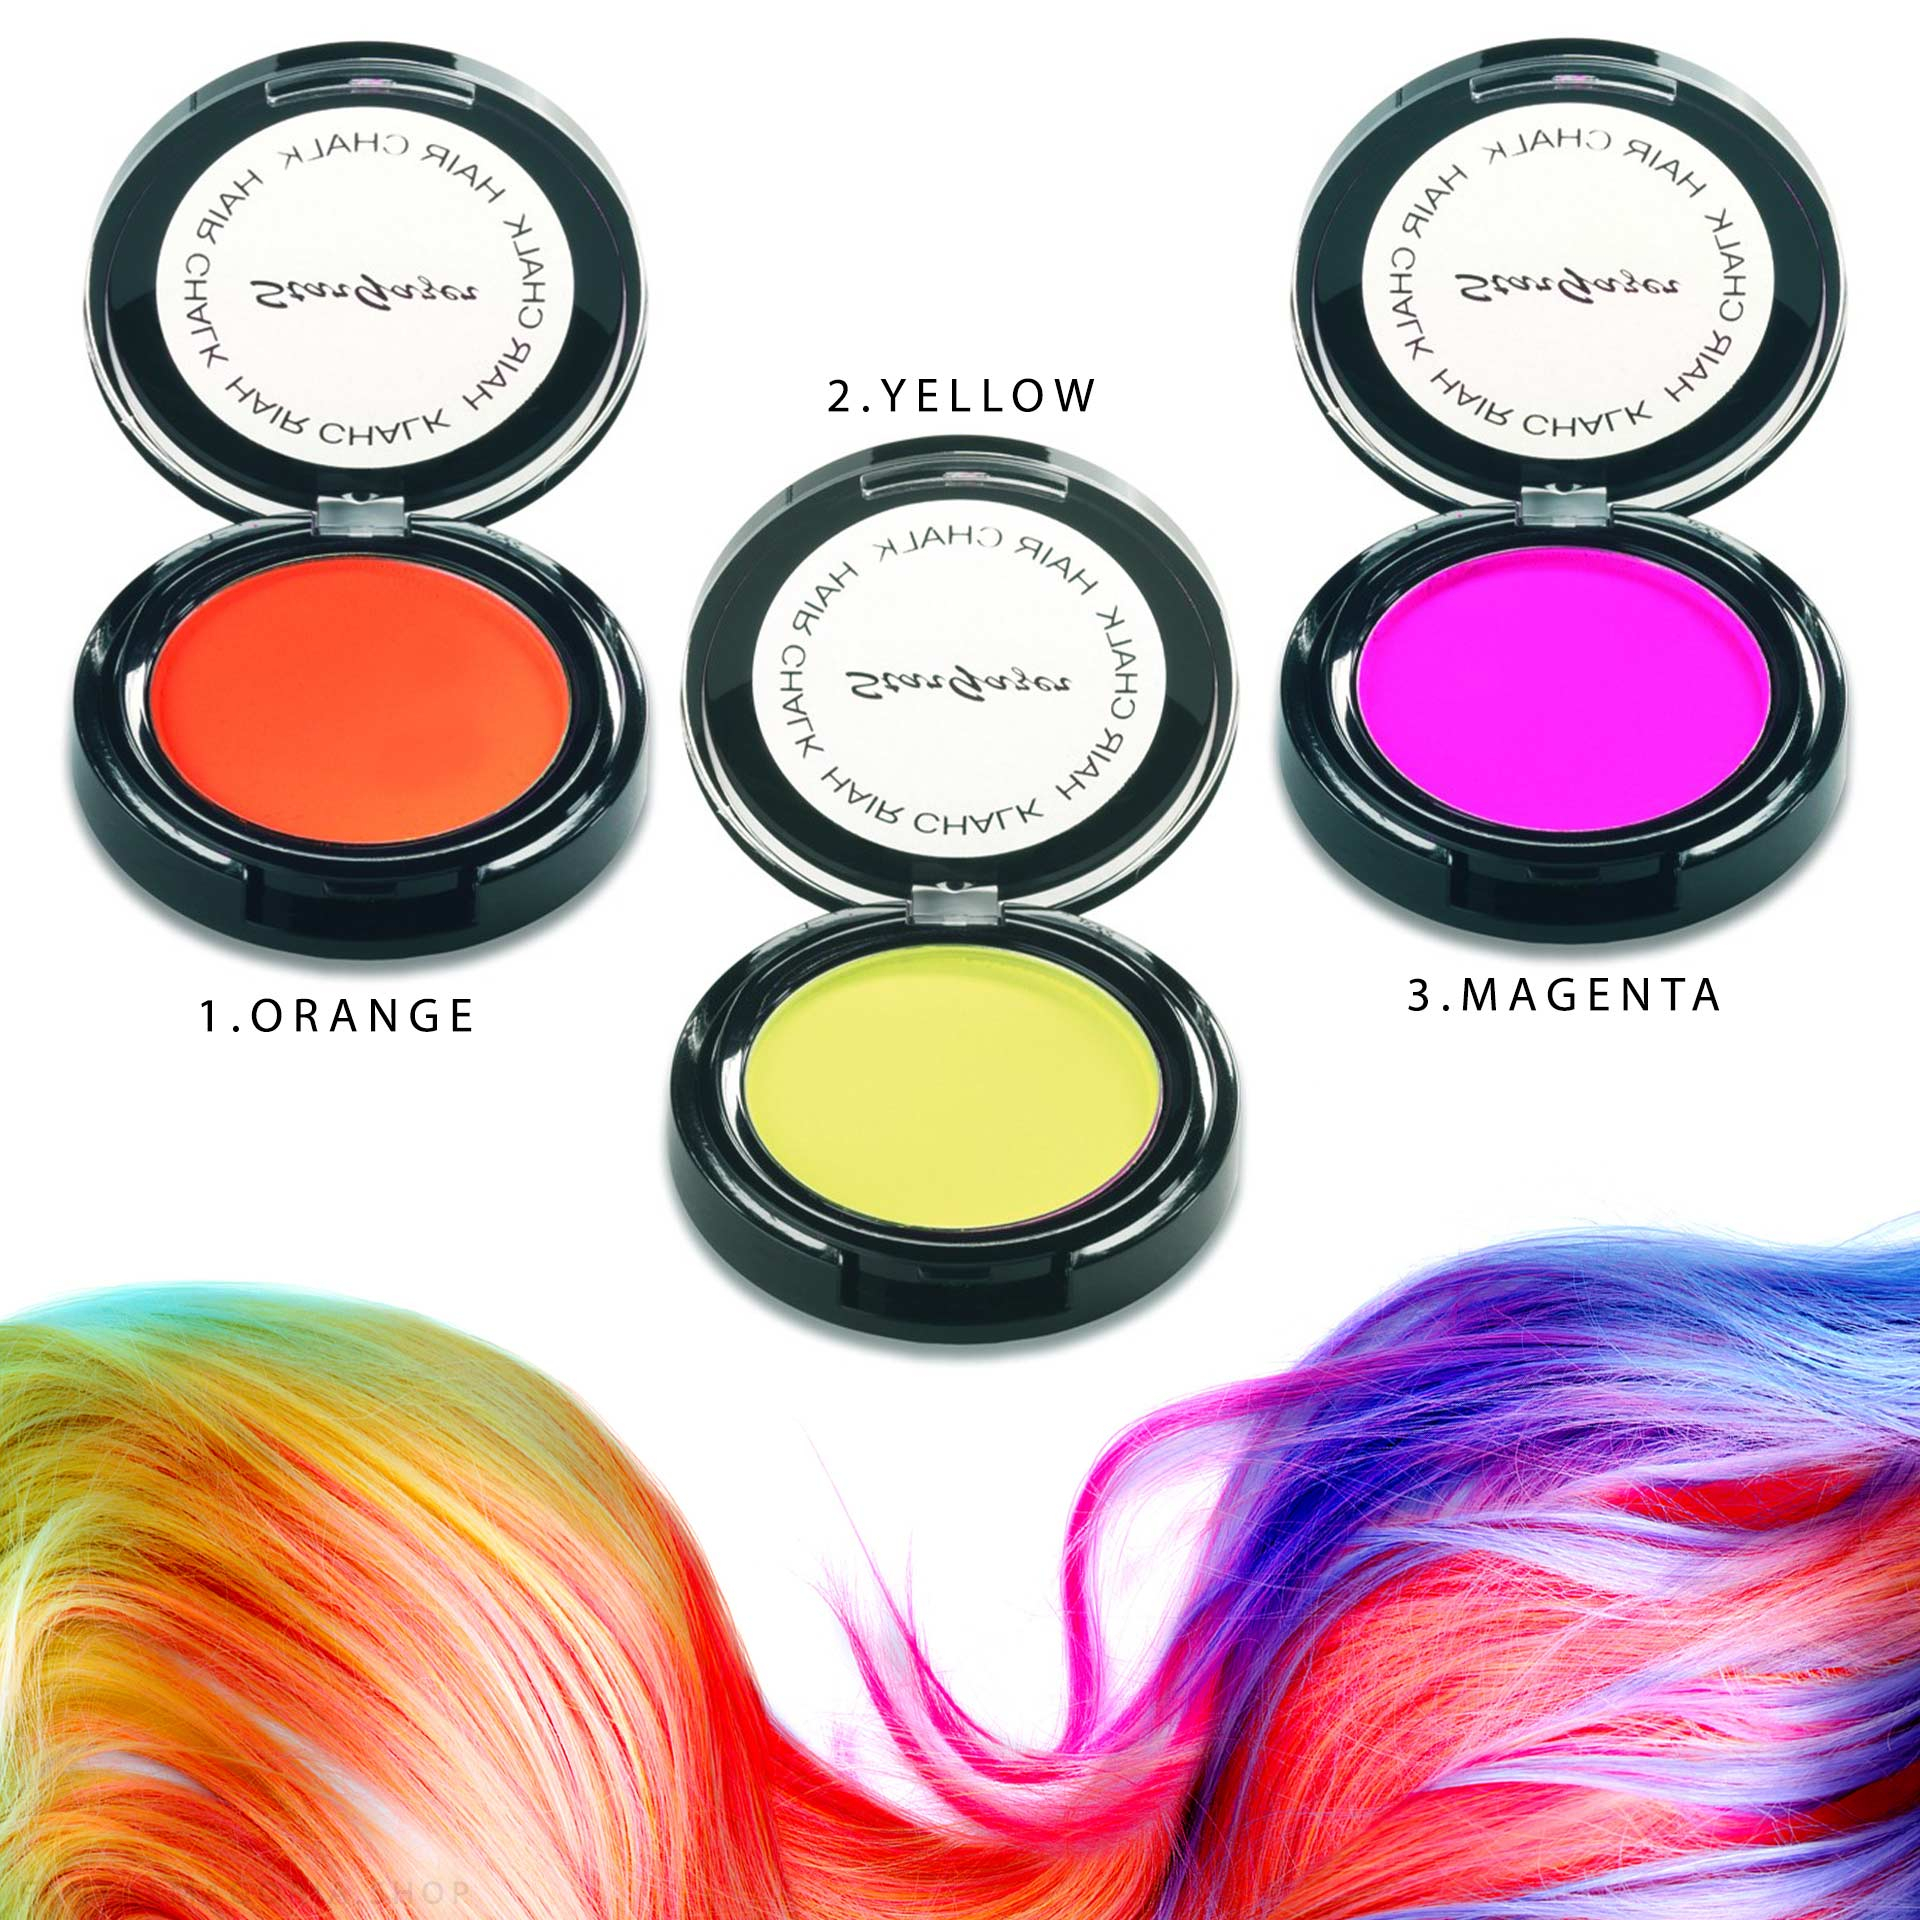 Colored Hair Chalk by Stargazer brand